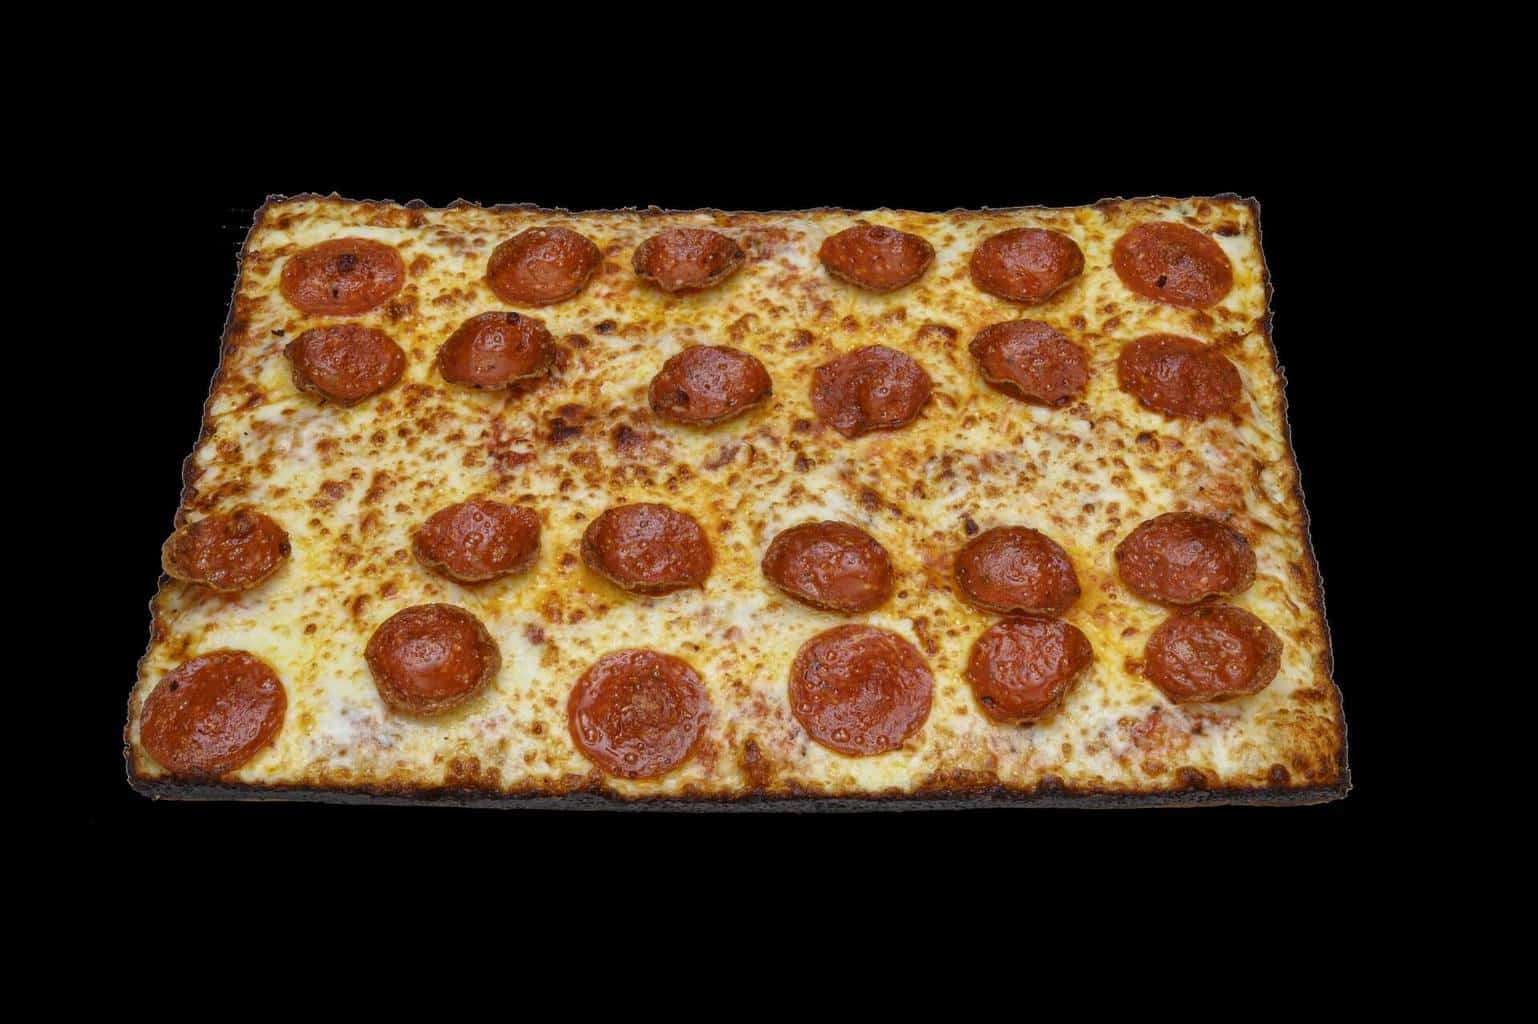 Square-shaped pepperoni pizza